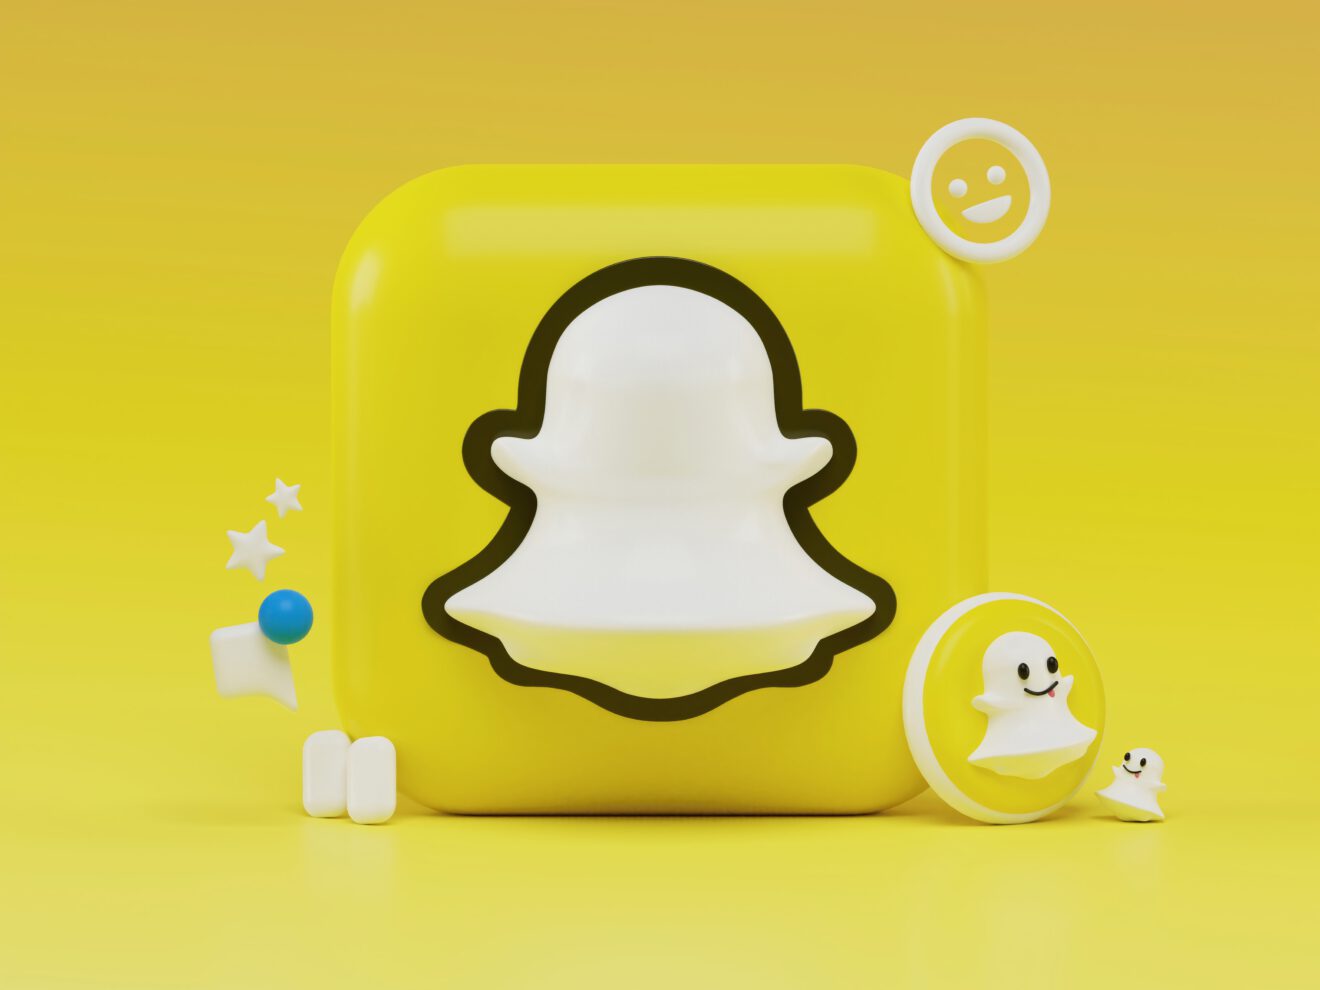 Snapchat's logo is displayed